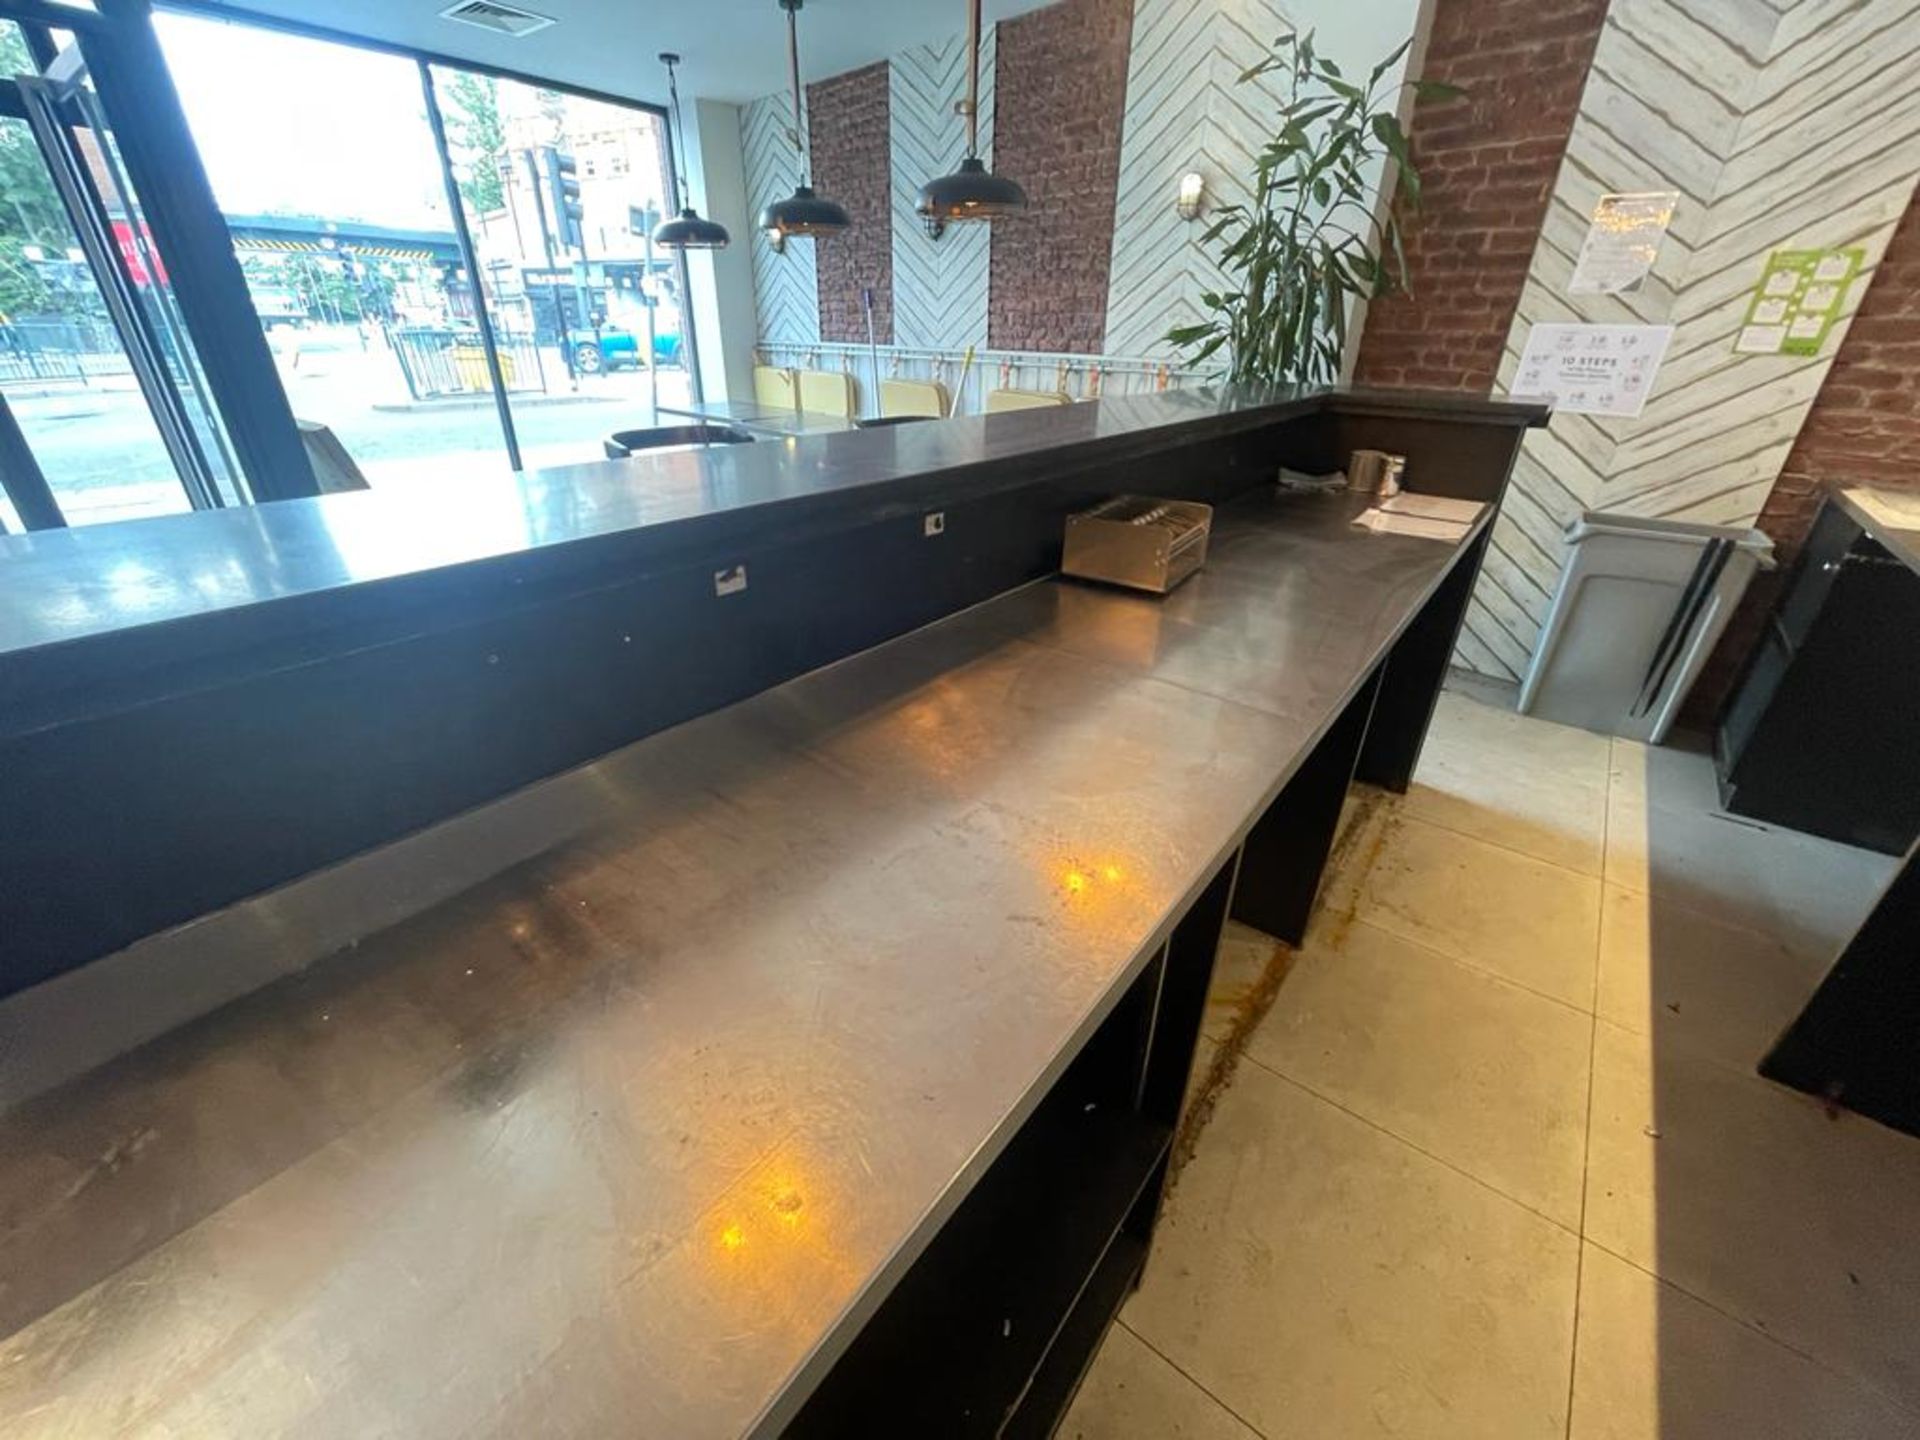 1 x Restaurant Drinks Bar Featuring a Shaped Design, Granite Worktop, Diamond Lattice Fascia - Image 13 of 25